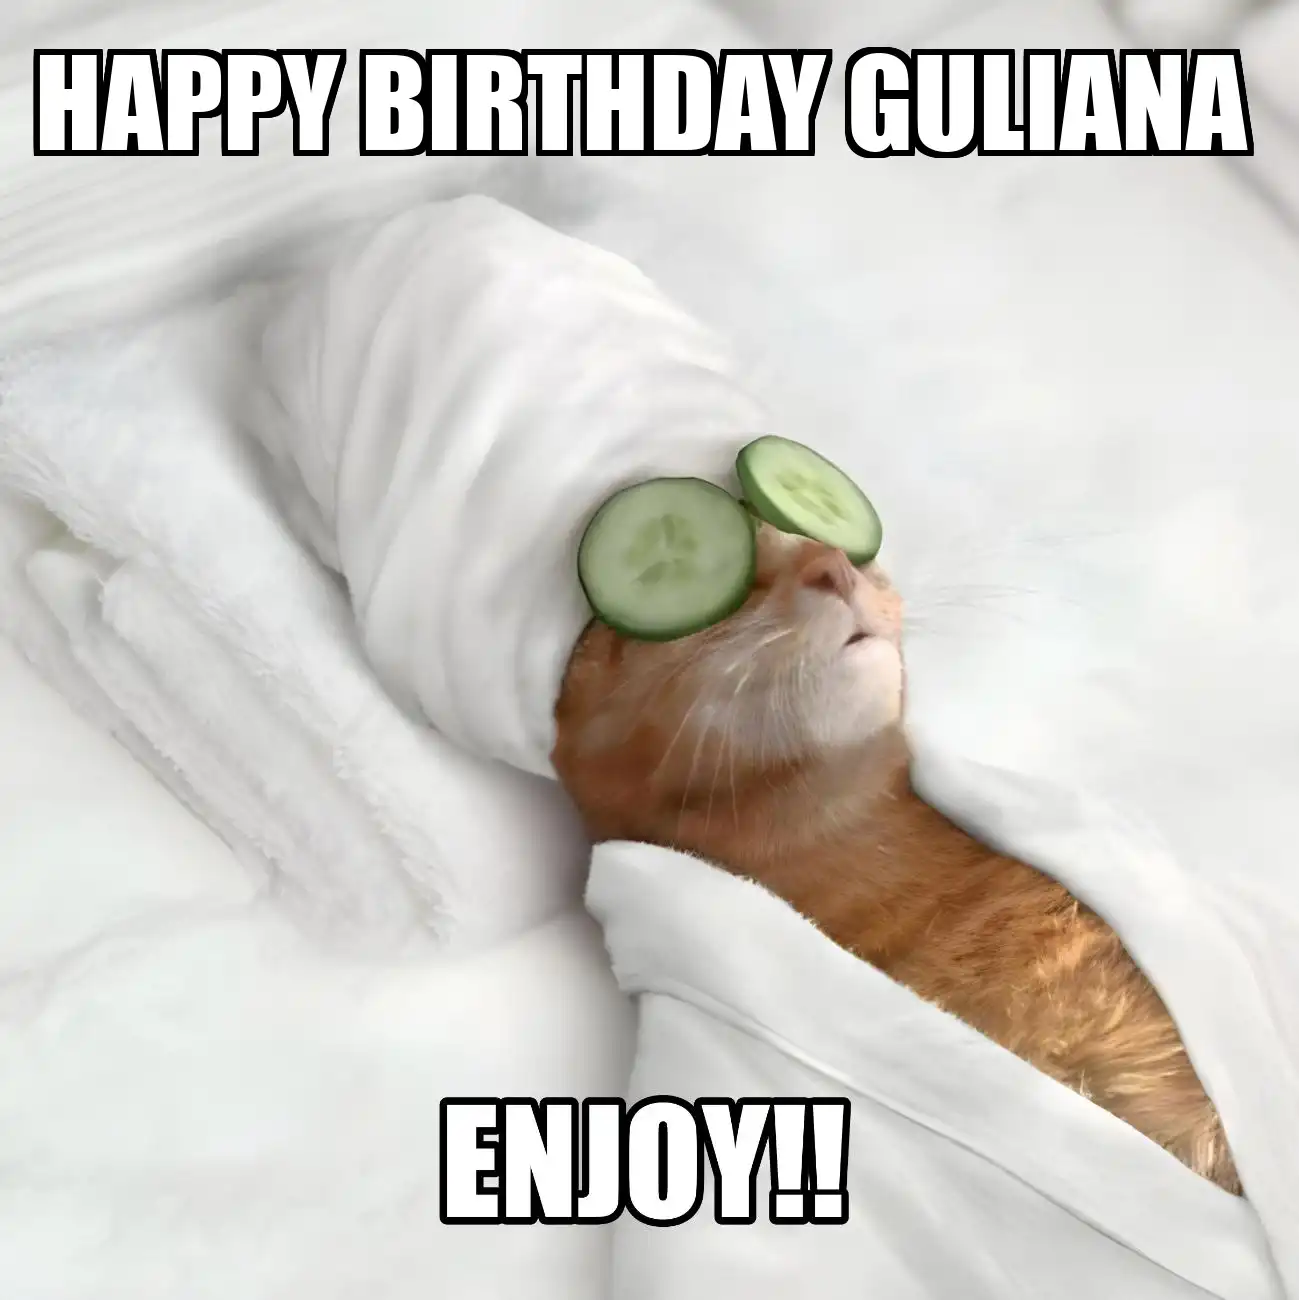 Happy Birthday Guliana Enjoy Cat Meme